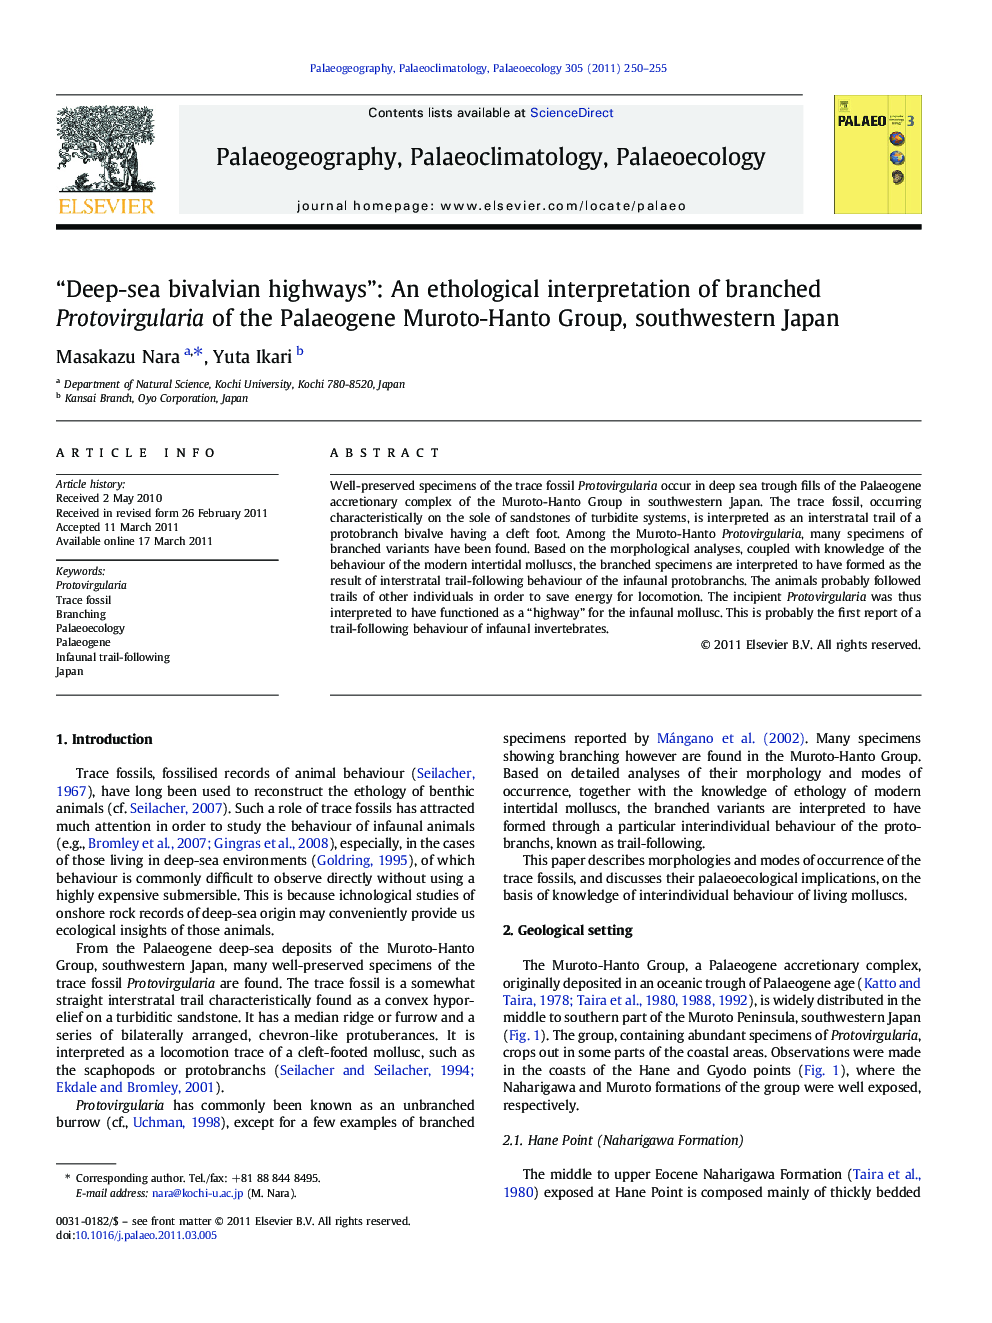 “Deep-sea bivalvian highways”: An ethological interpretation of branched Protovirgularia of the Palaeogene Muroto-Hanto Group, southwestern Japan